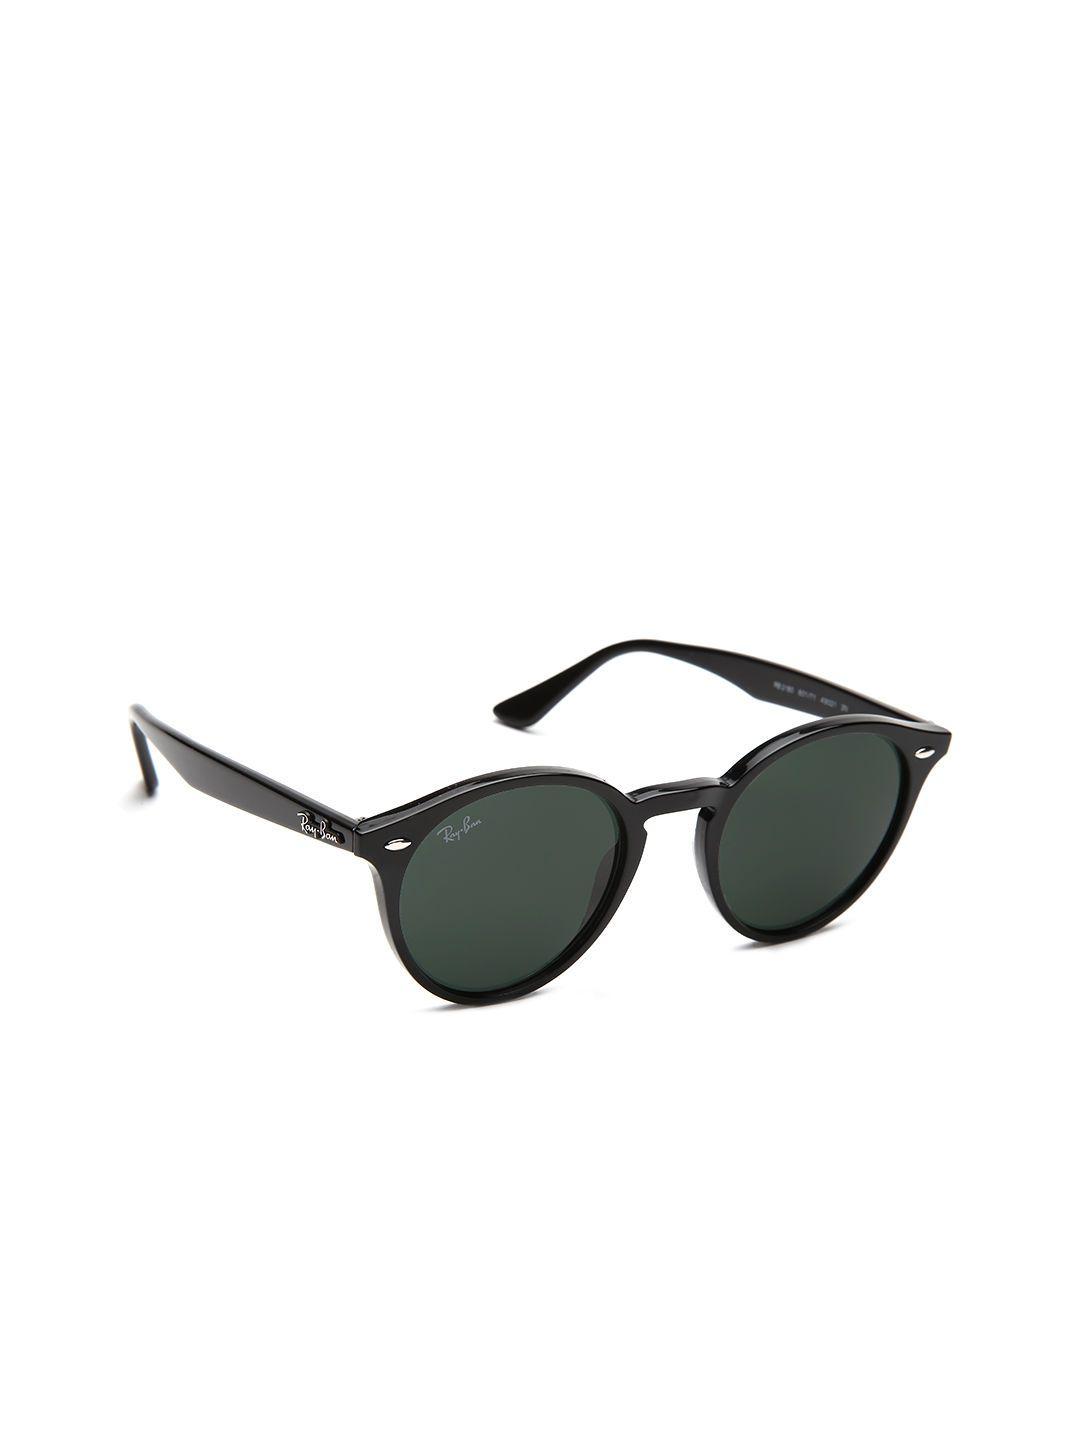 ray-ban-unisex-round-sunglasses-0rb2180